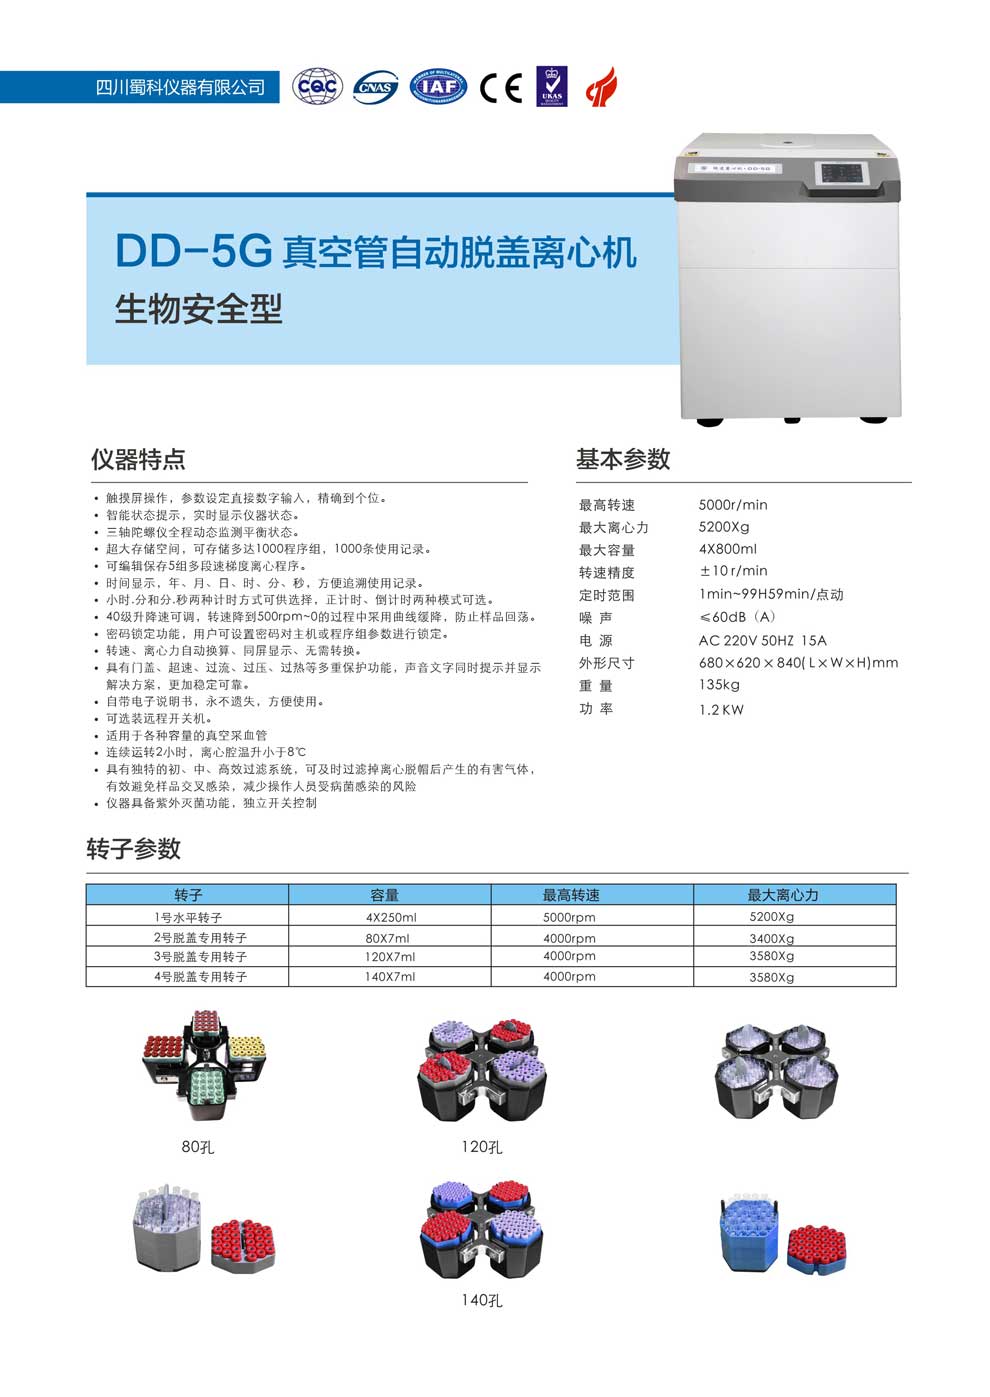 DD-5G-生物安全型-彩页.jpg